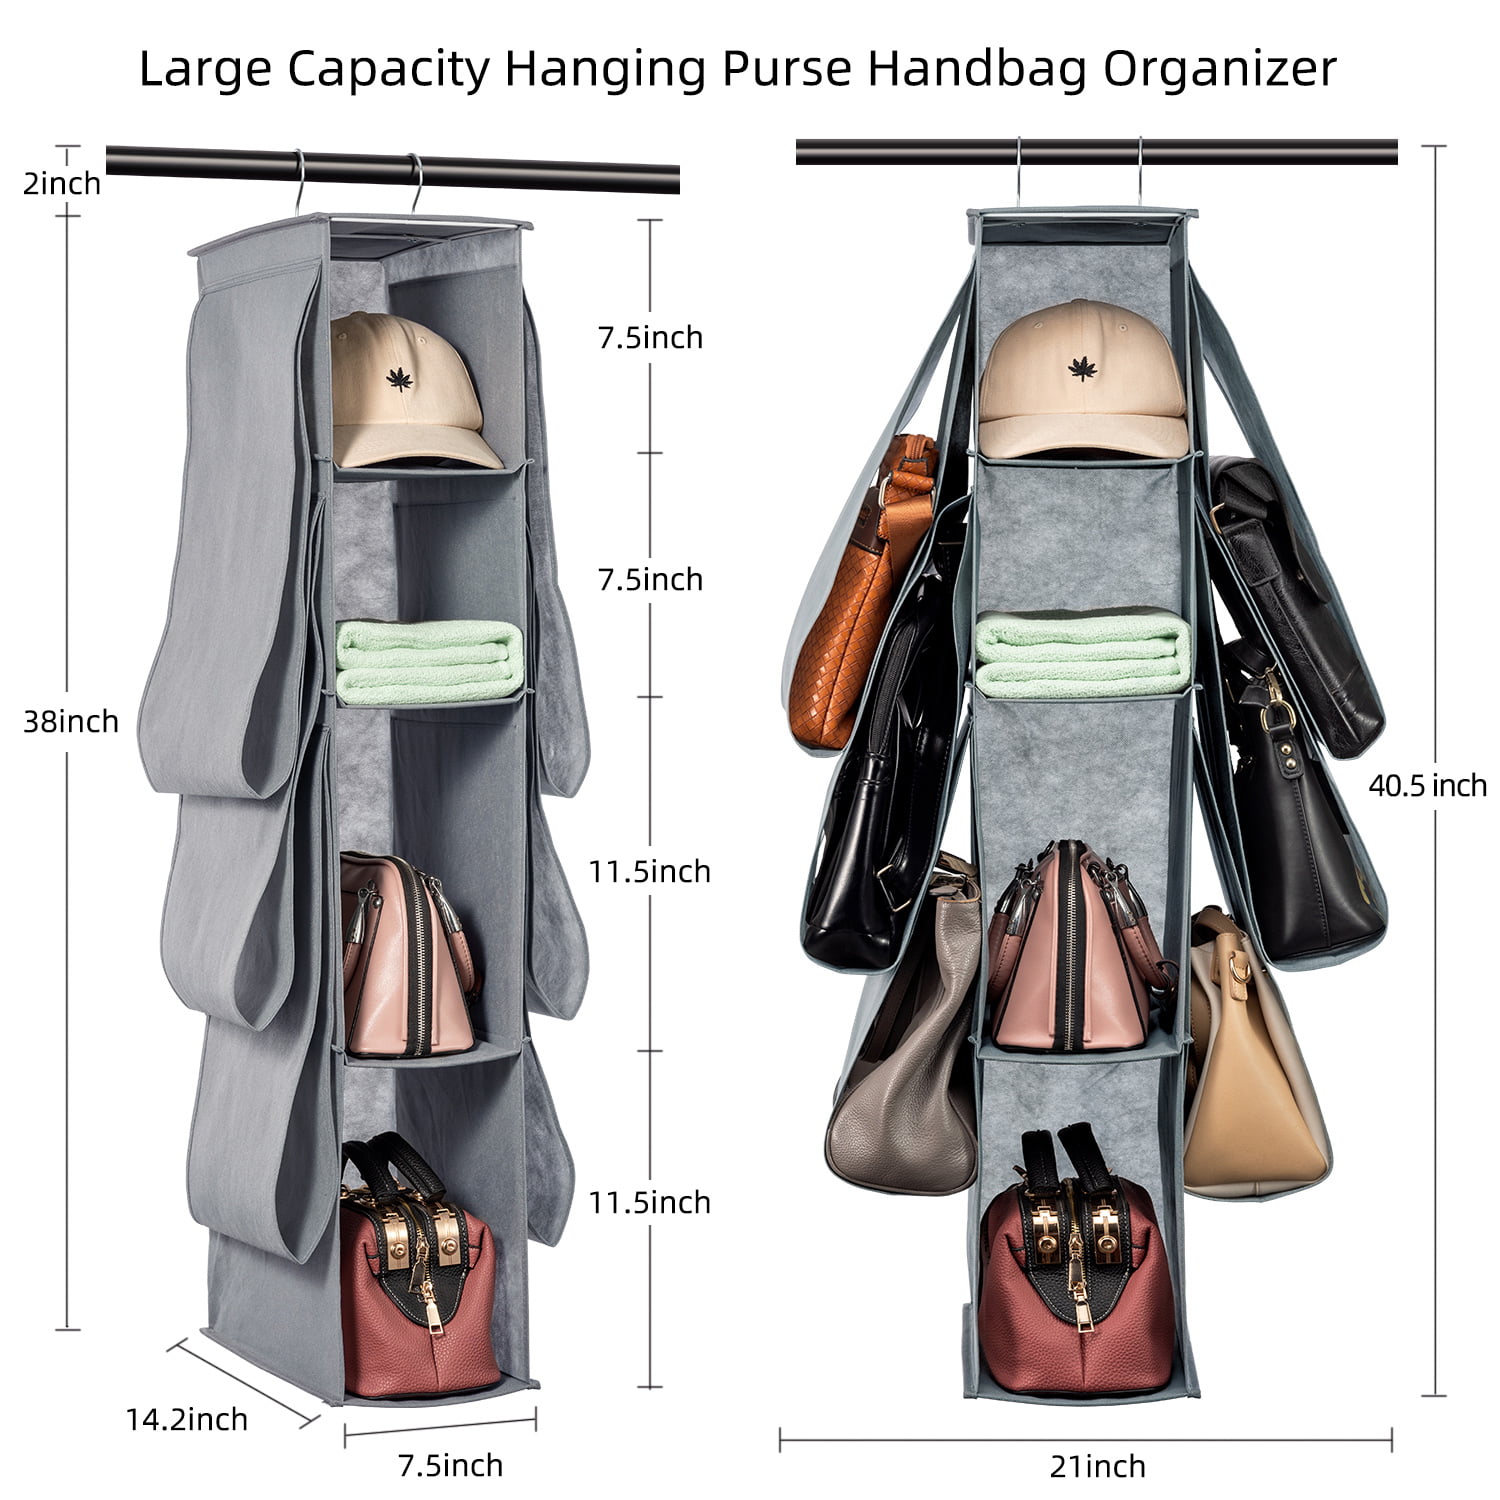 KEEPJOY Hanging Purse Organizer for Closet,White 10 Pockets Purse Organizer  for Wardrobe Handbag Organizers Purse Holder 